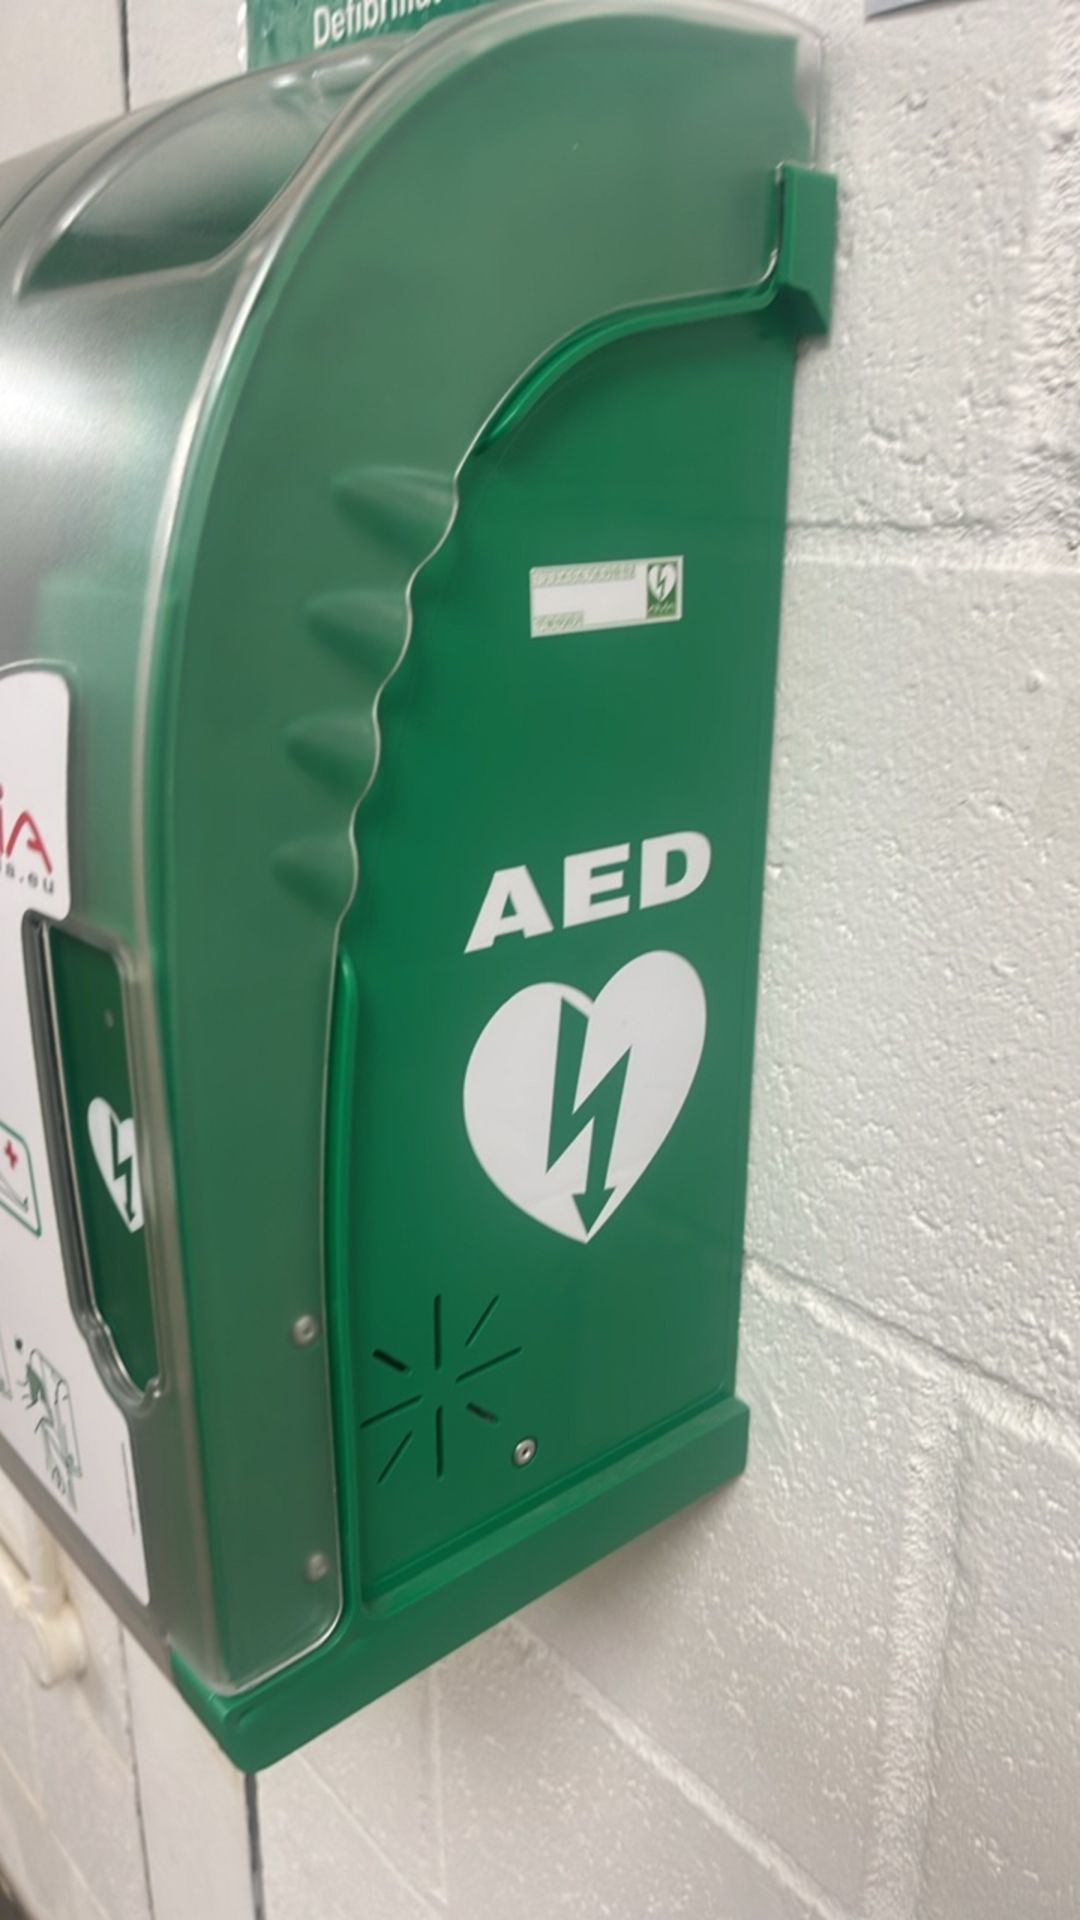 Defibrillator - Image 5 of 6